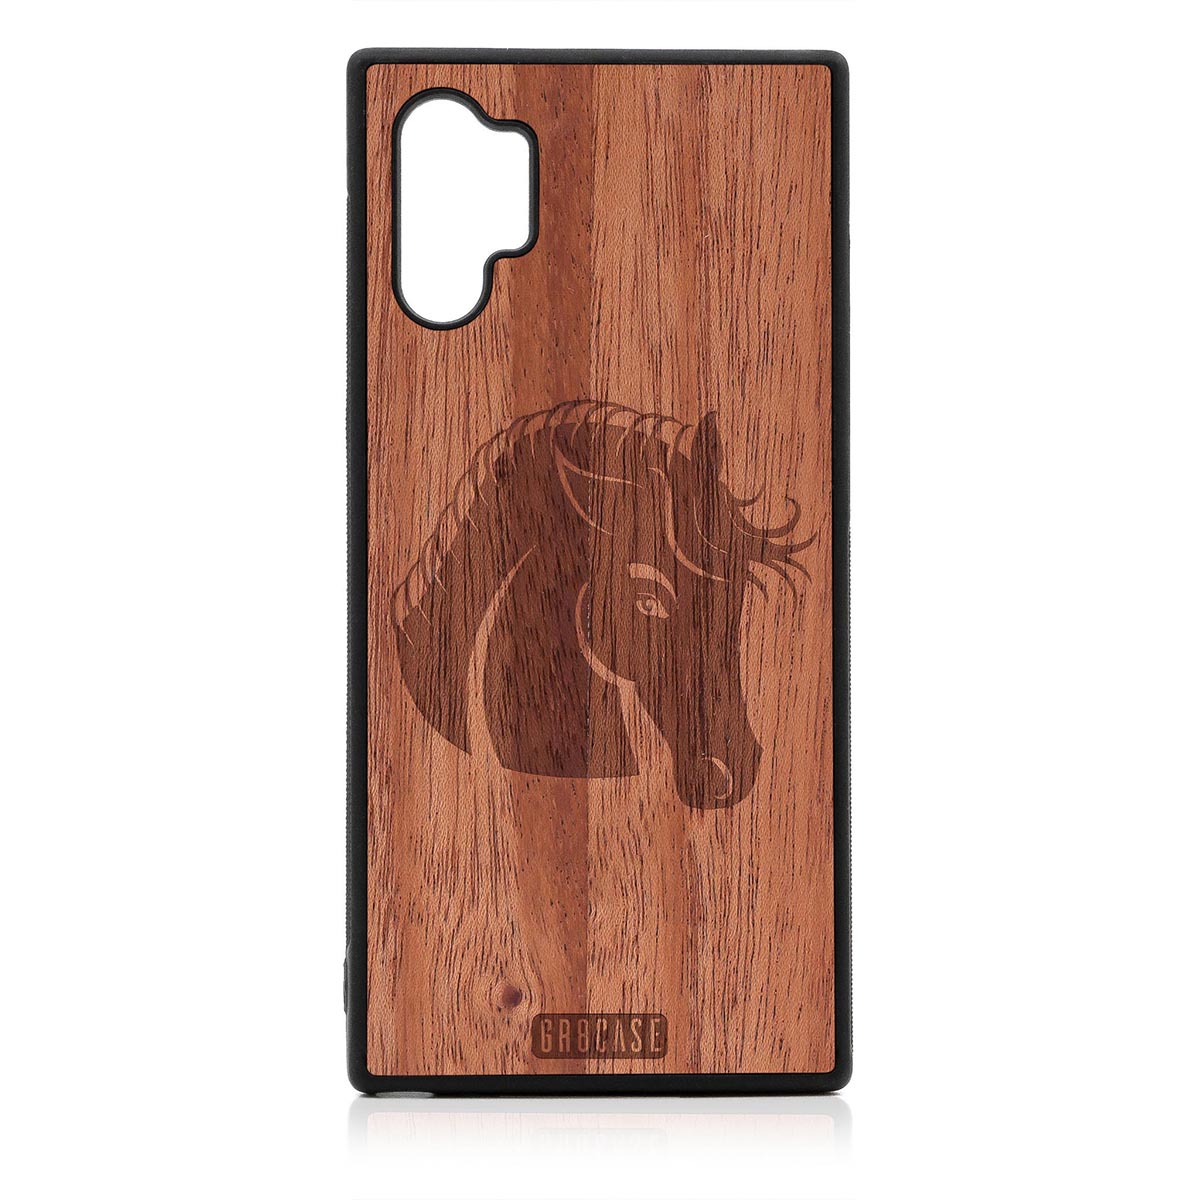 Horse Design Wood Case Samsung Galaxy Note 10 Plus by GR8CASE